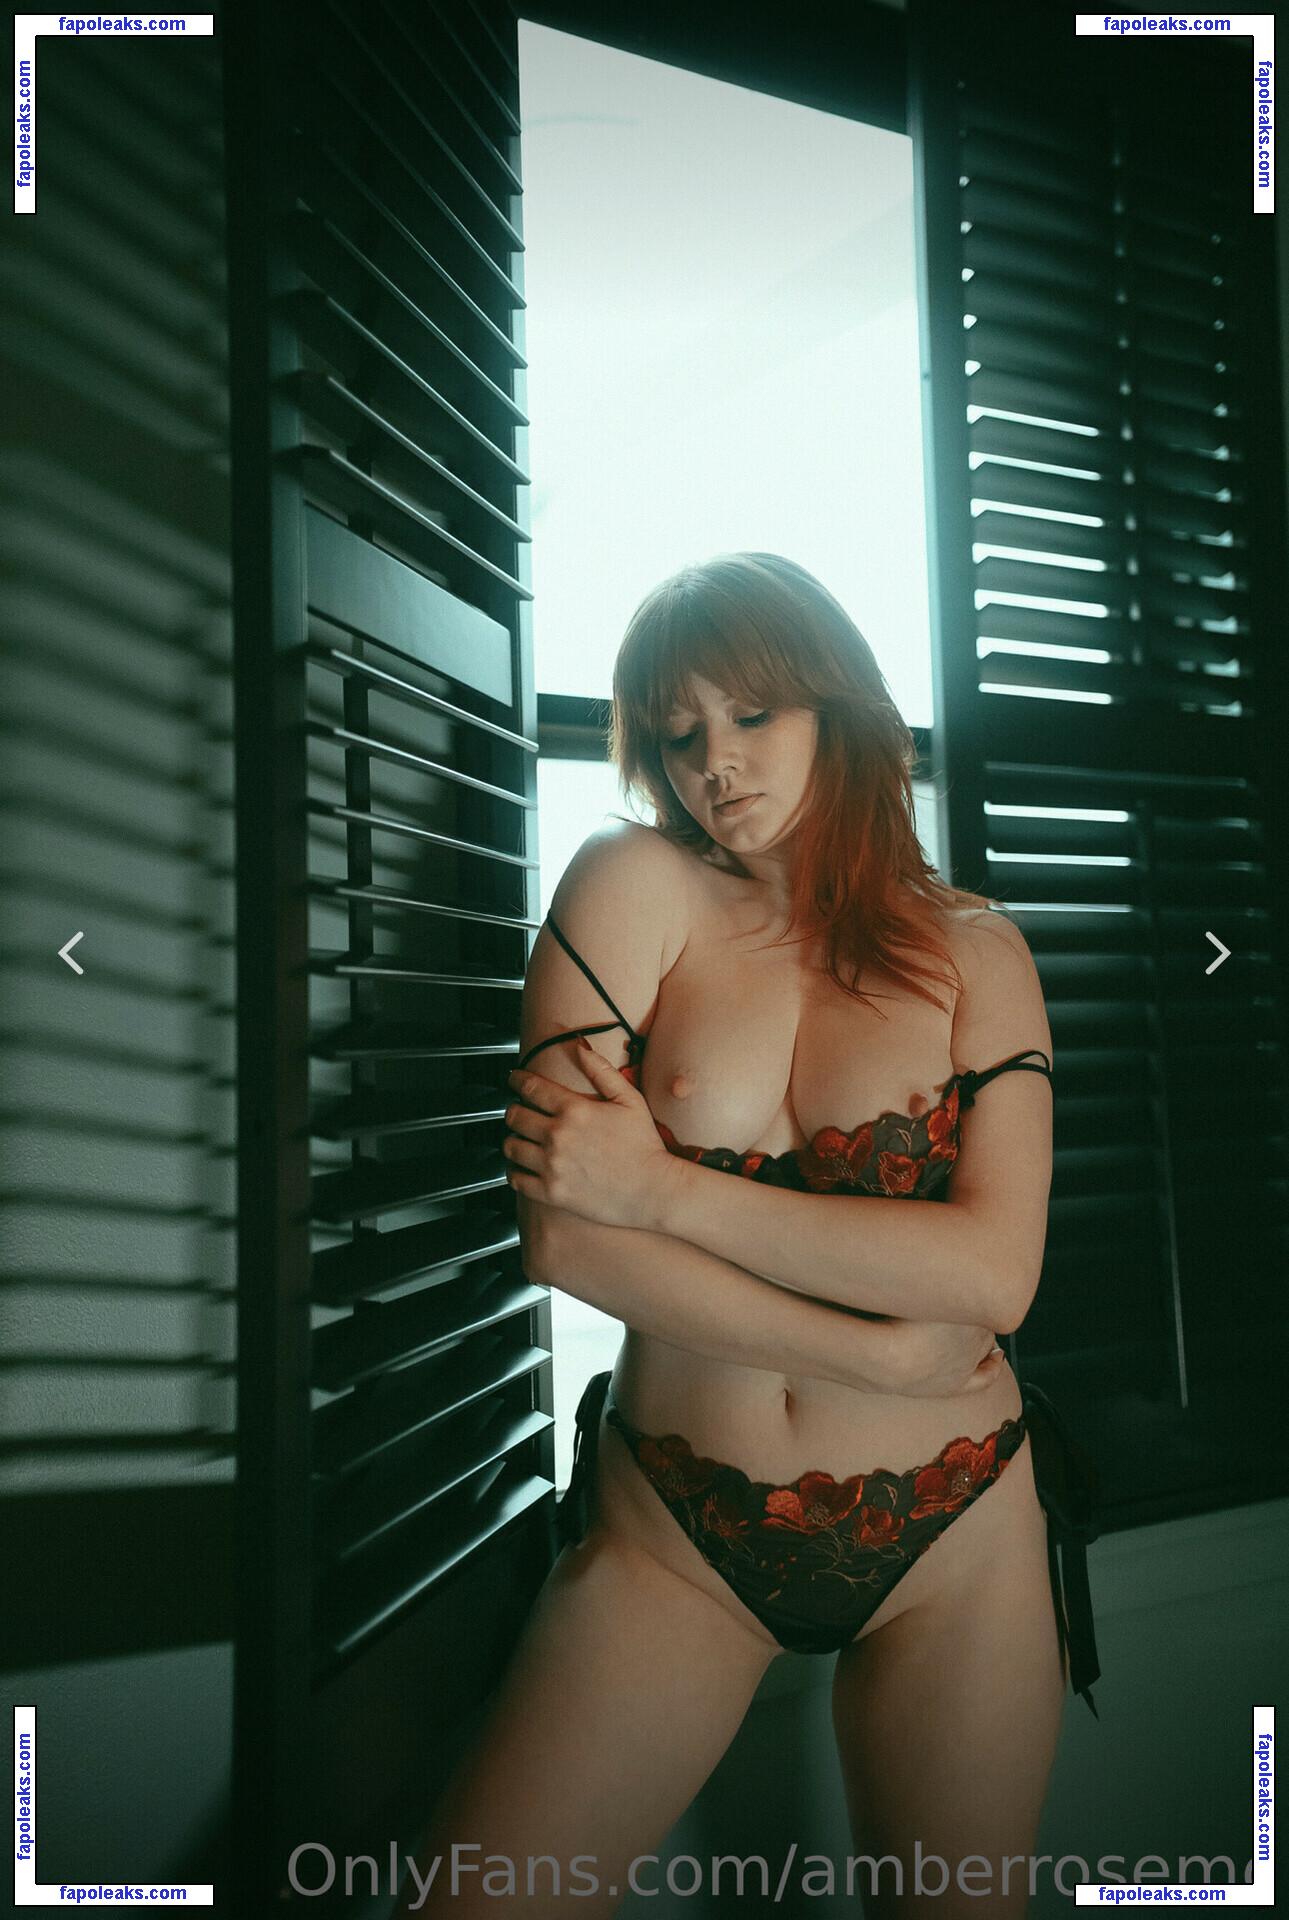 Amber Rose McConnell / amberrosemc / amberrosemcconnell nude photo #0135 from OnlyFans